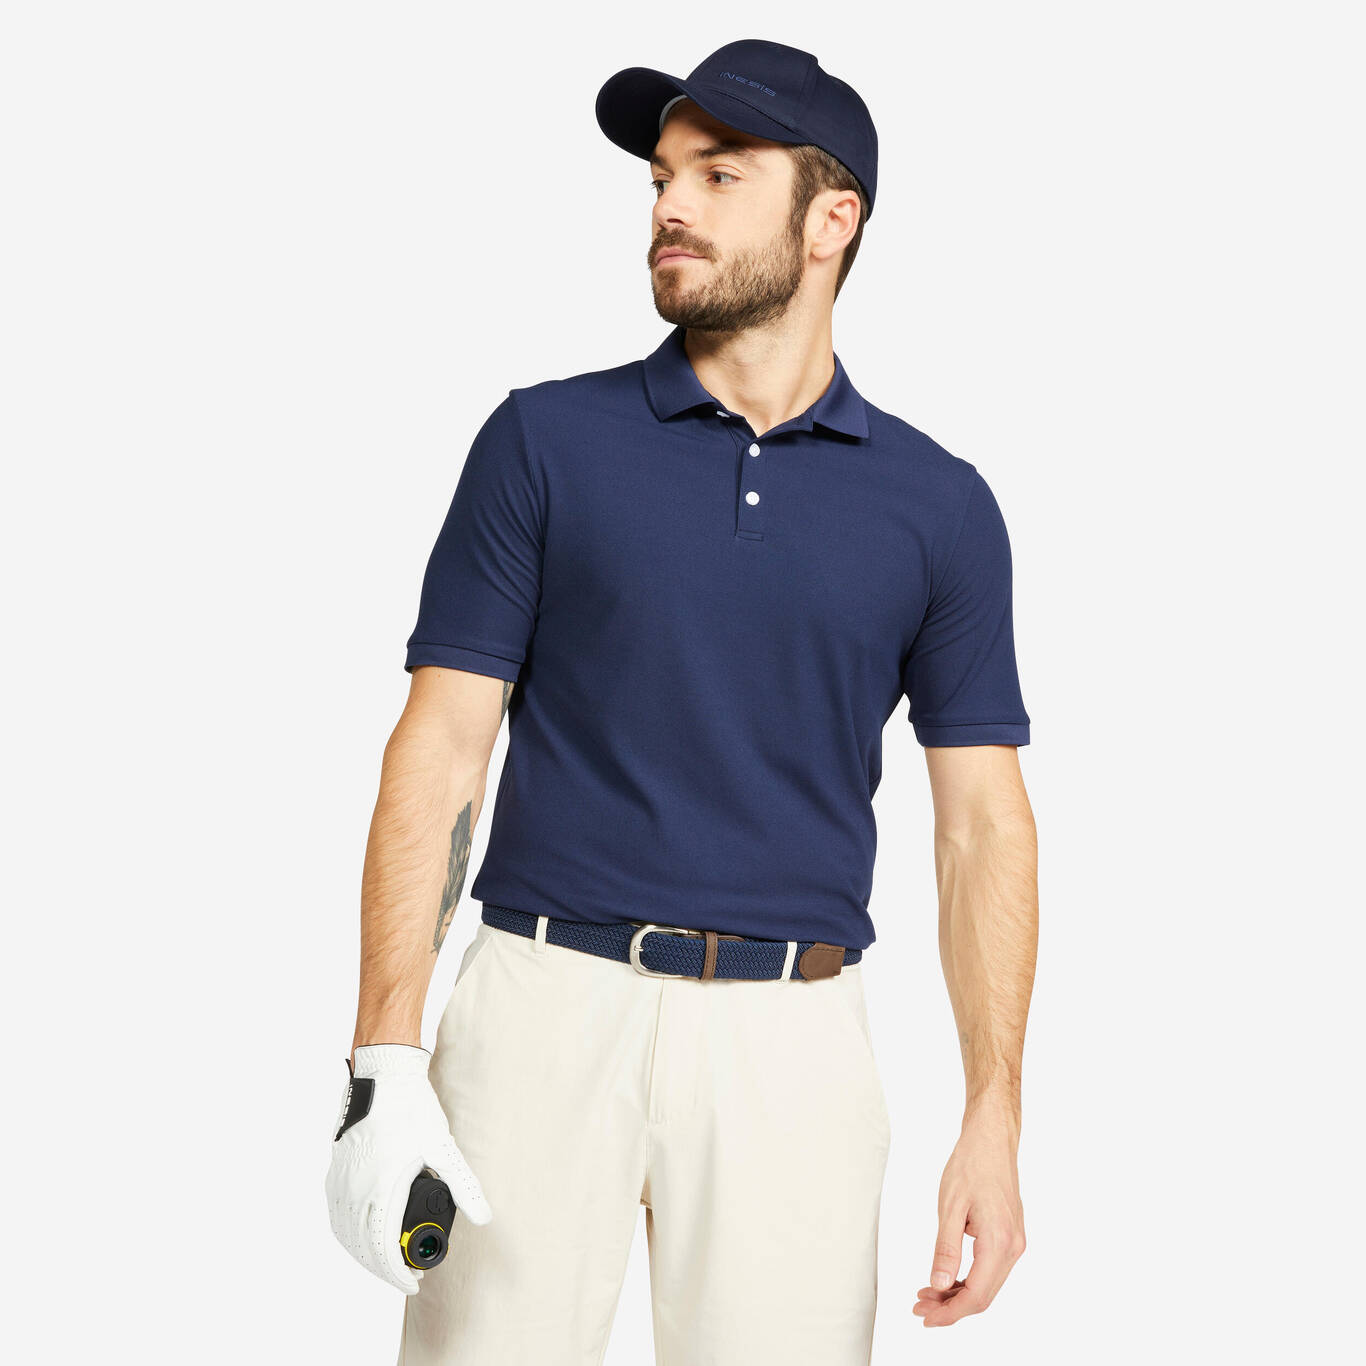 Kaus polo lengan pendek golf pria WW500 biru dongker